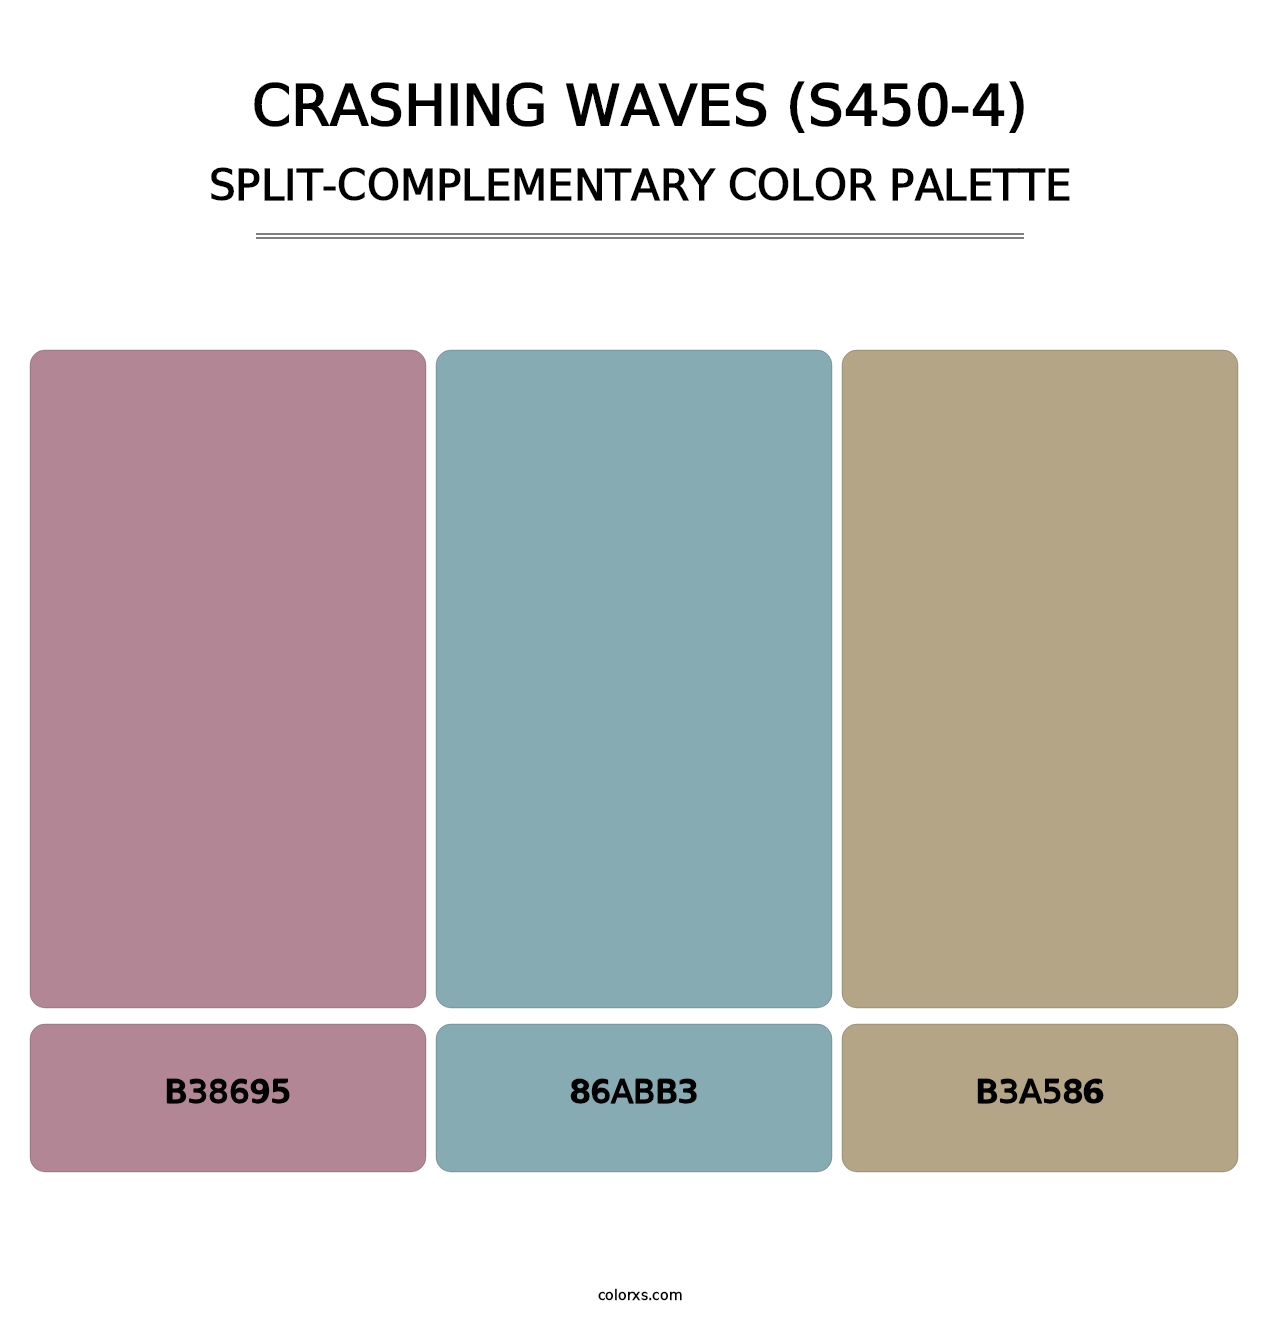 Crashing Waves (S450-4) - Split-Complementary Color Palette